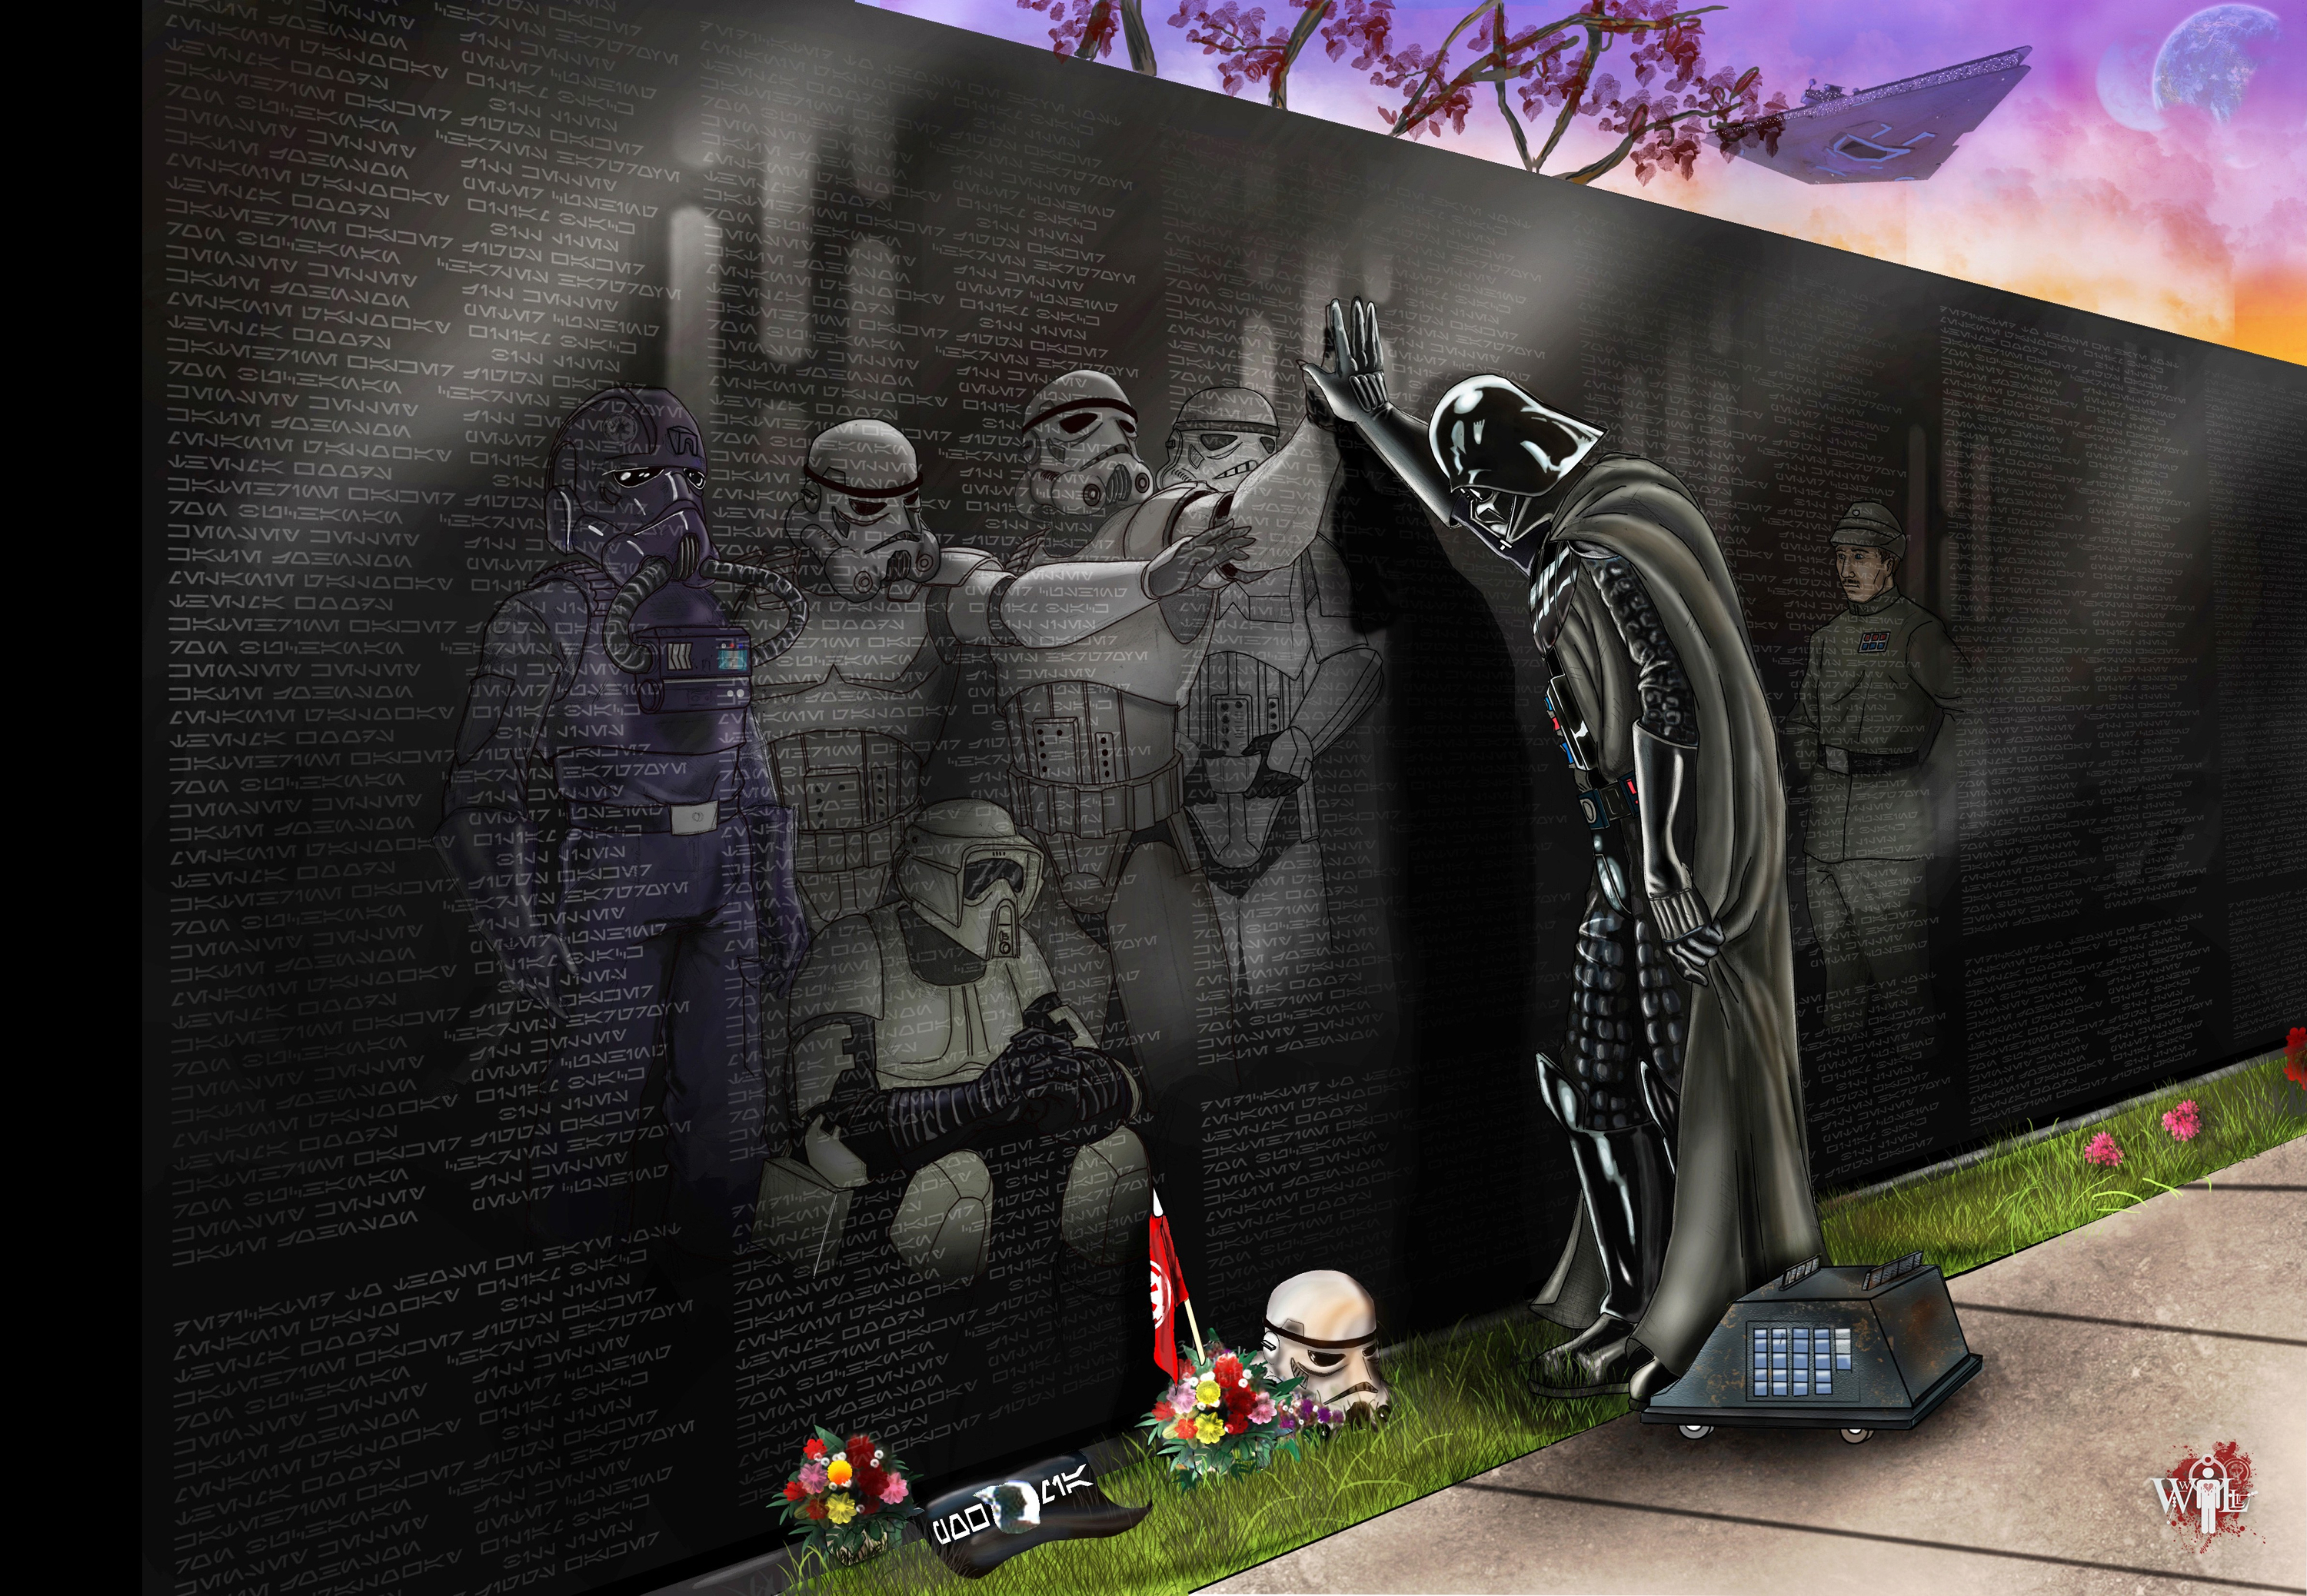 General 3000x2076 Anakin Skywalker Star Wars Darth Vader death memorial fictional character HUMOR dark humor